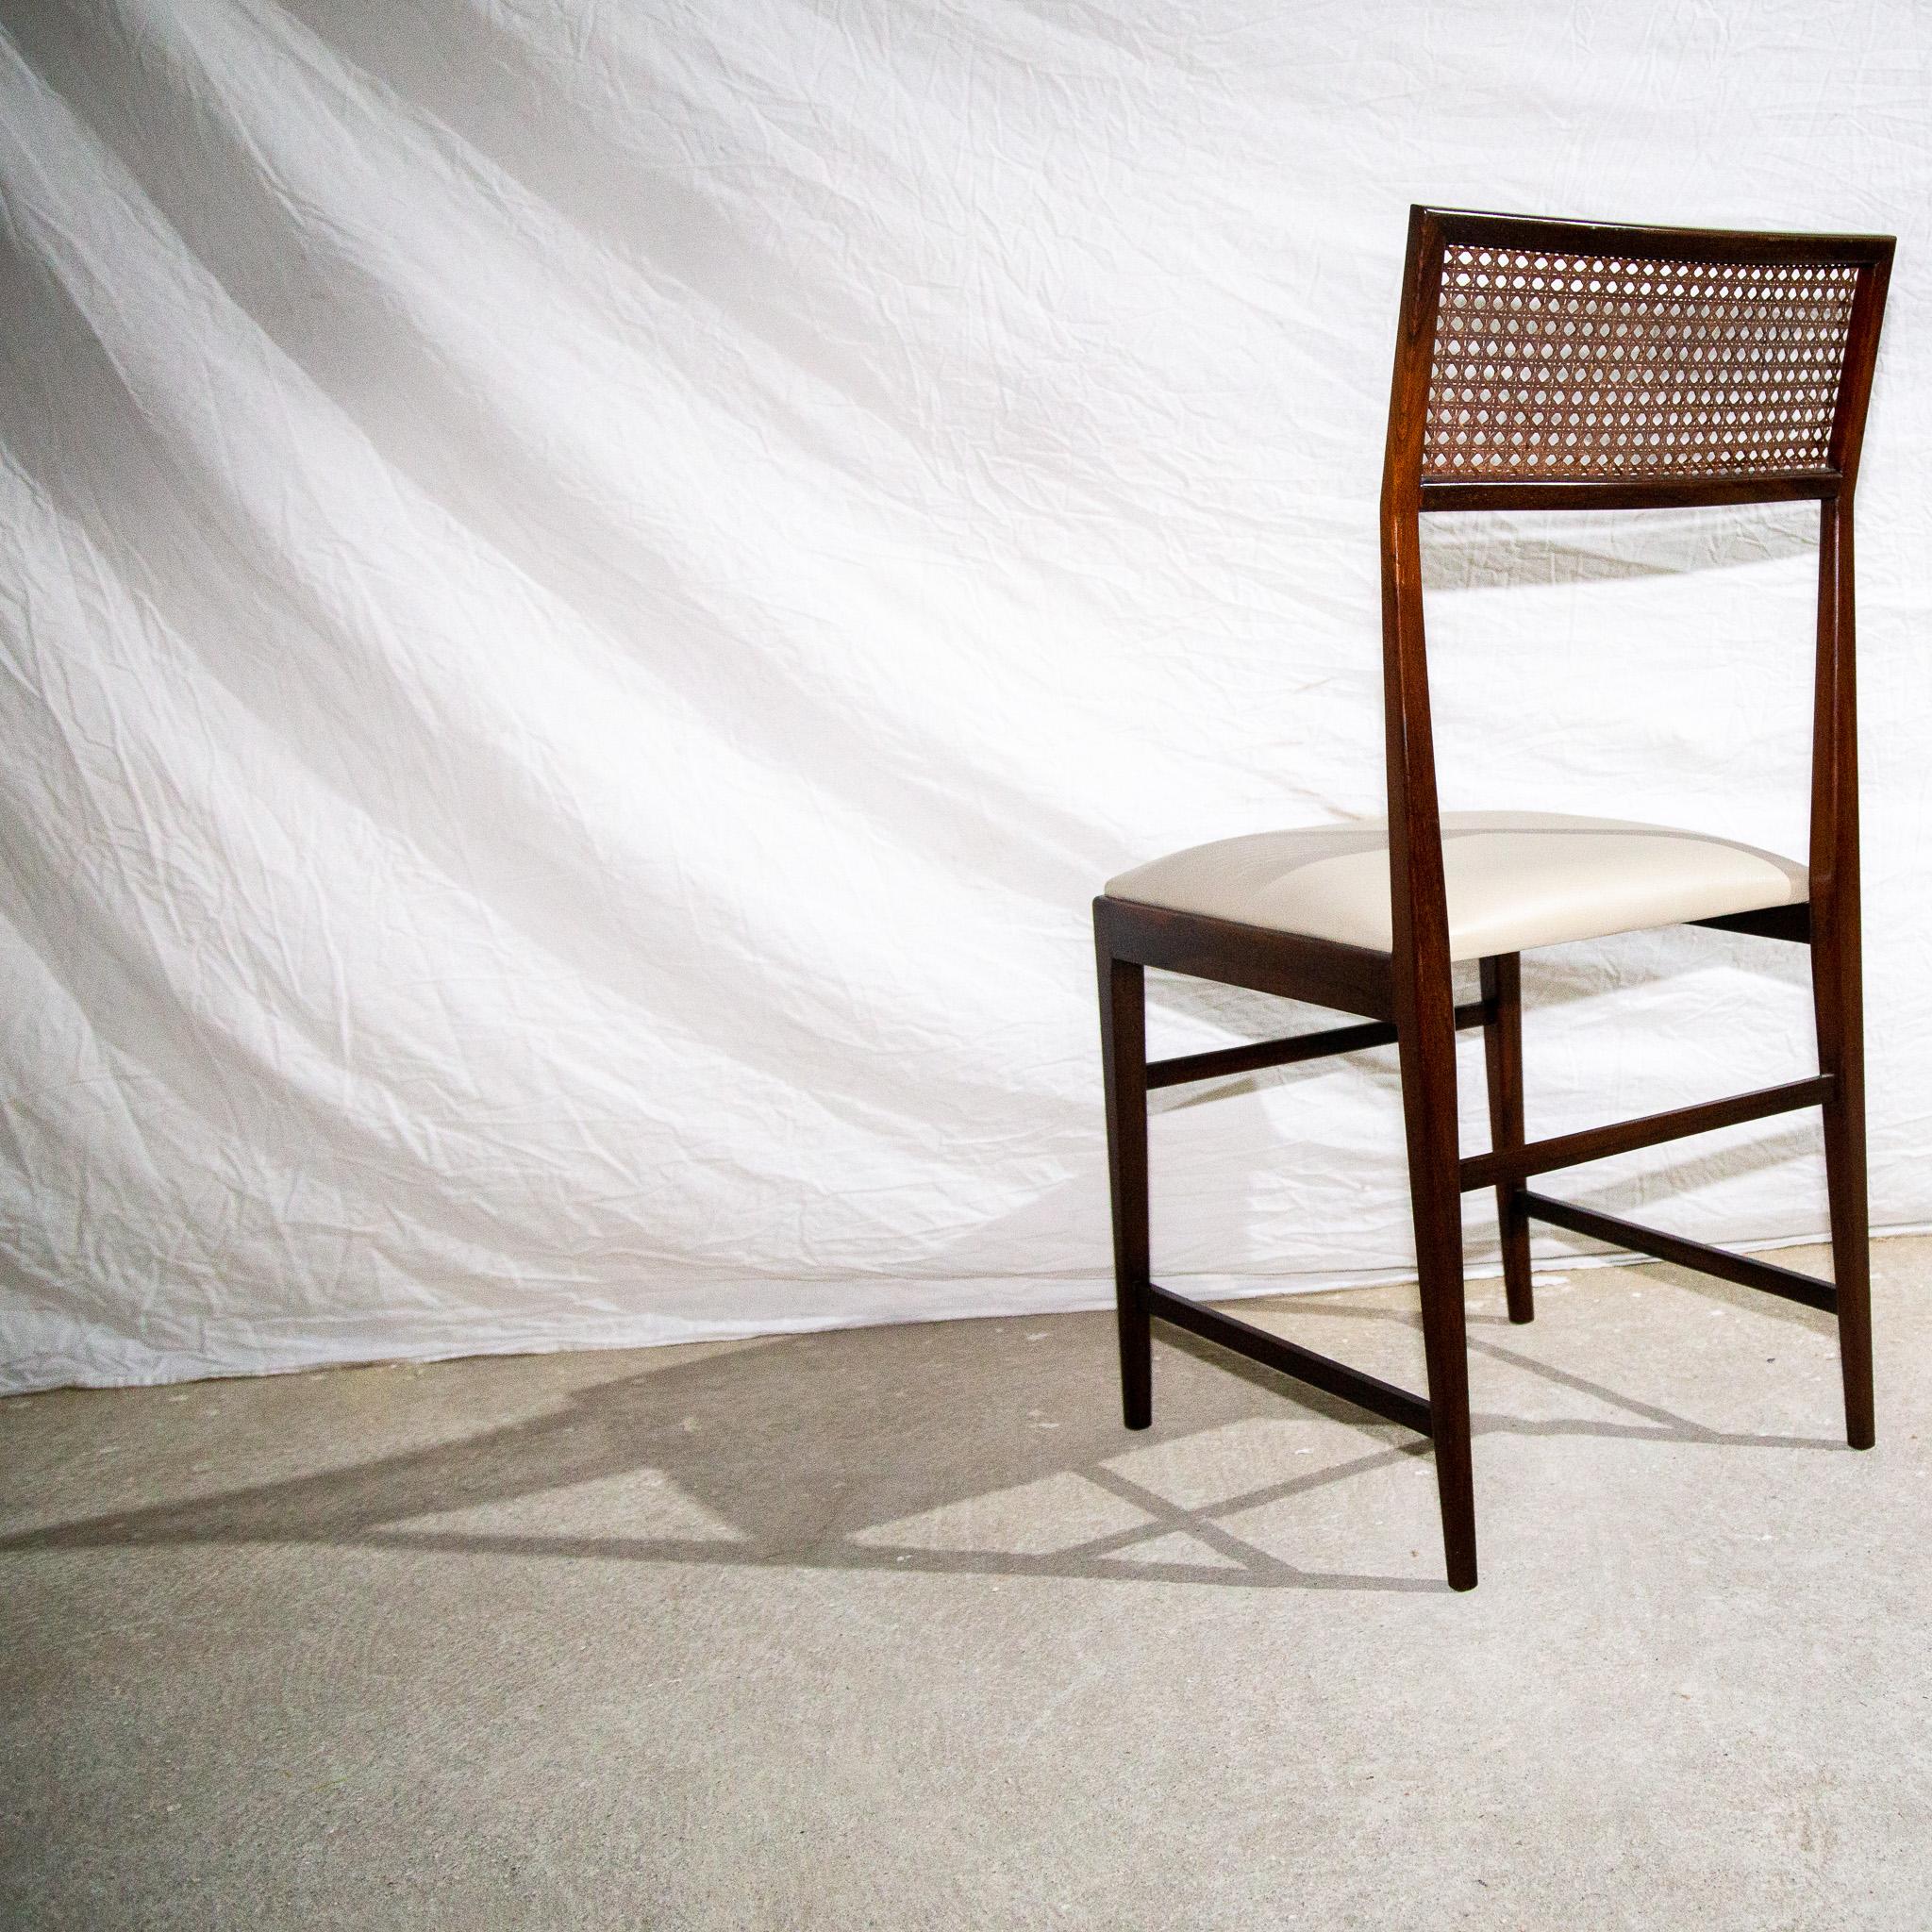 Brazilian Modern 4 Chair Set in Hardwood, Cane, Leather, Joaquim Tenreiro 1950s For Sale 9